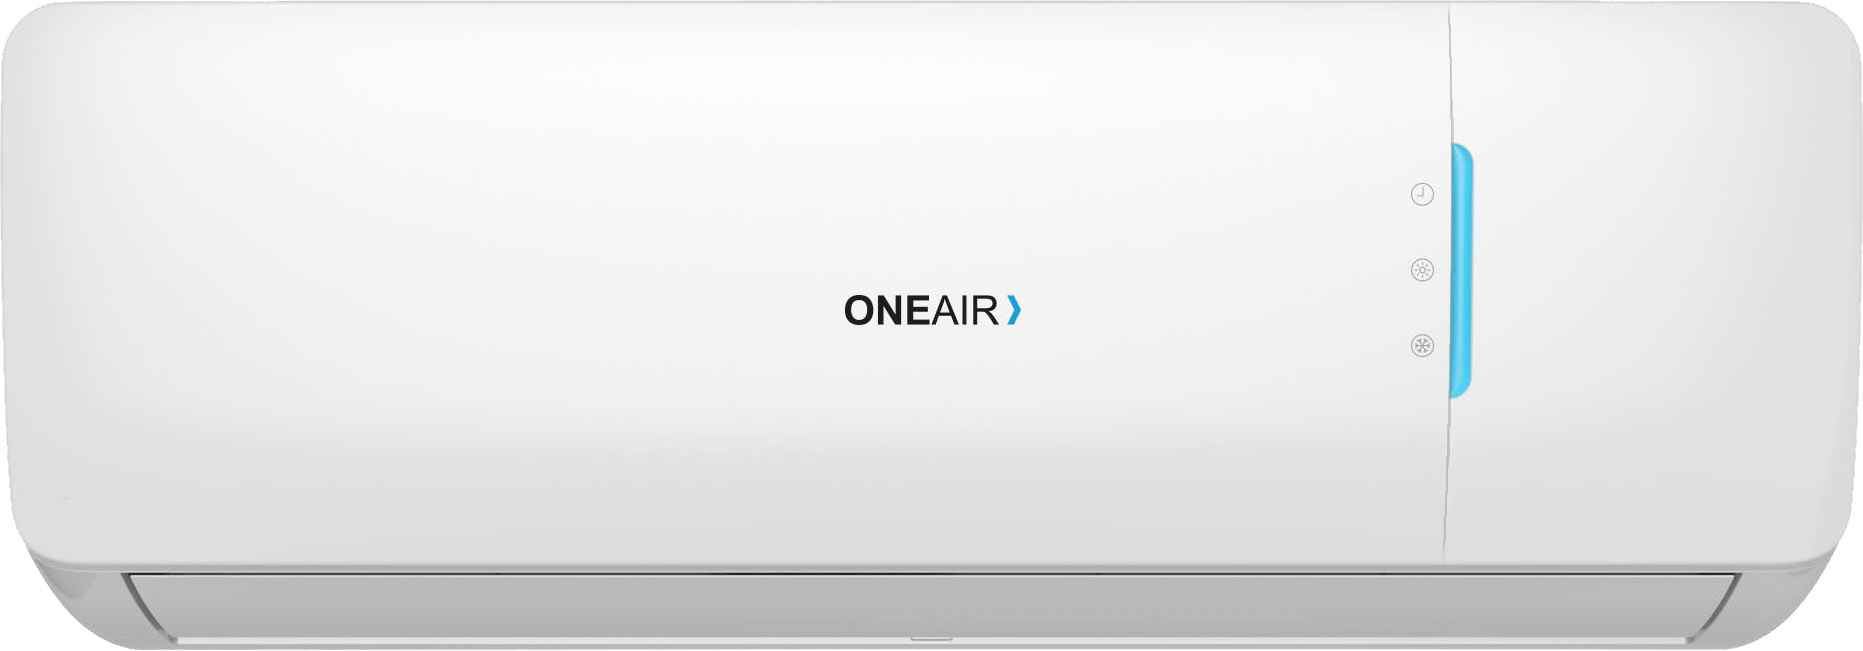 Кондиционер сплит-система OneAir OAC-07H/N1 цена 0.00 грн - фотография 2